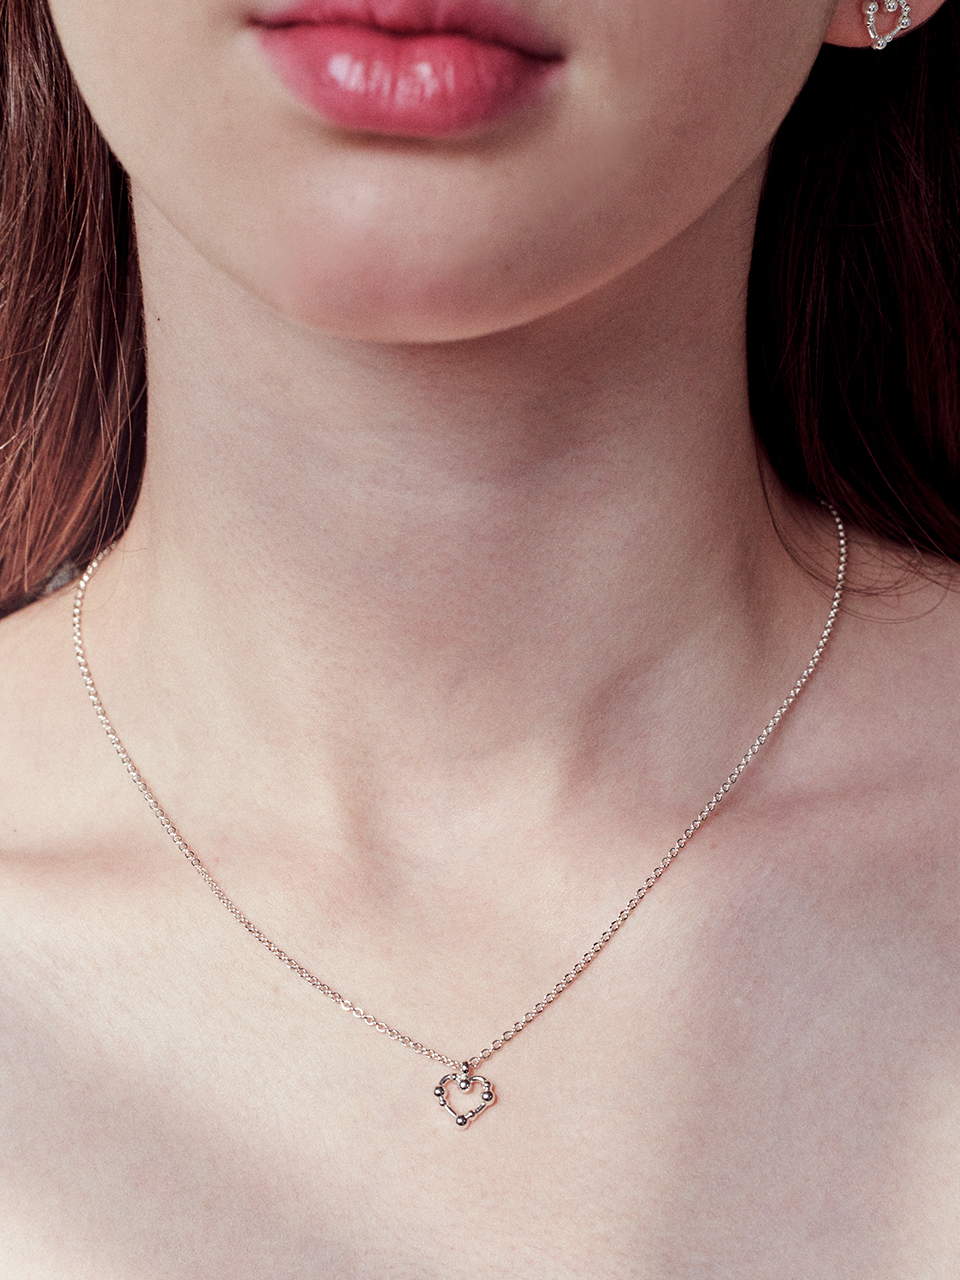 clotty heart necklace